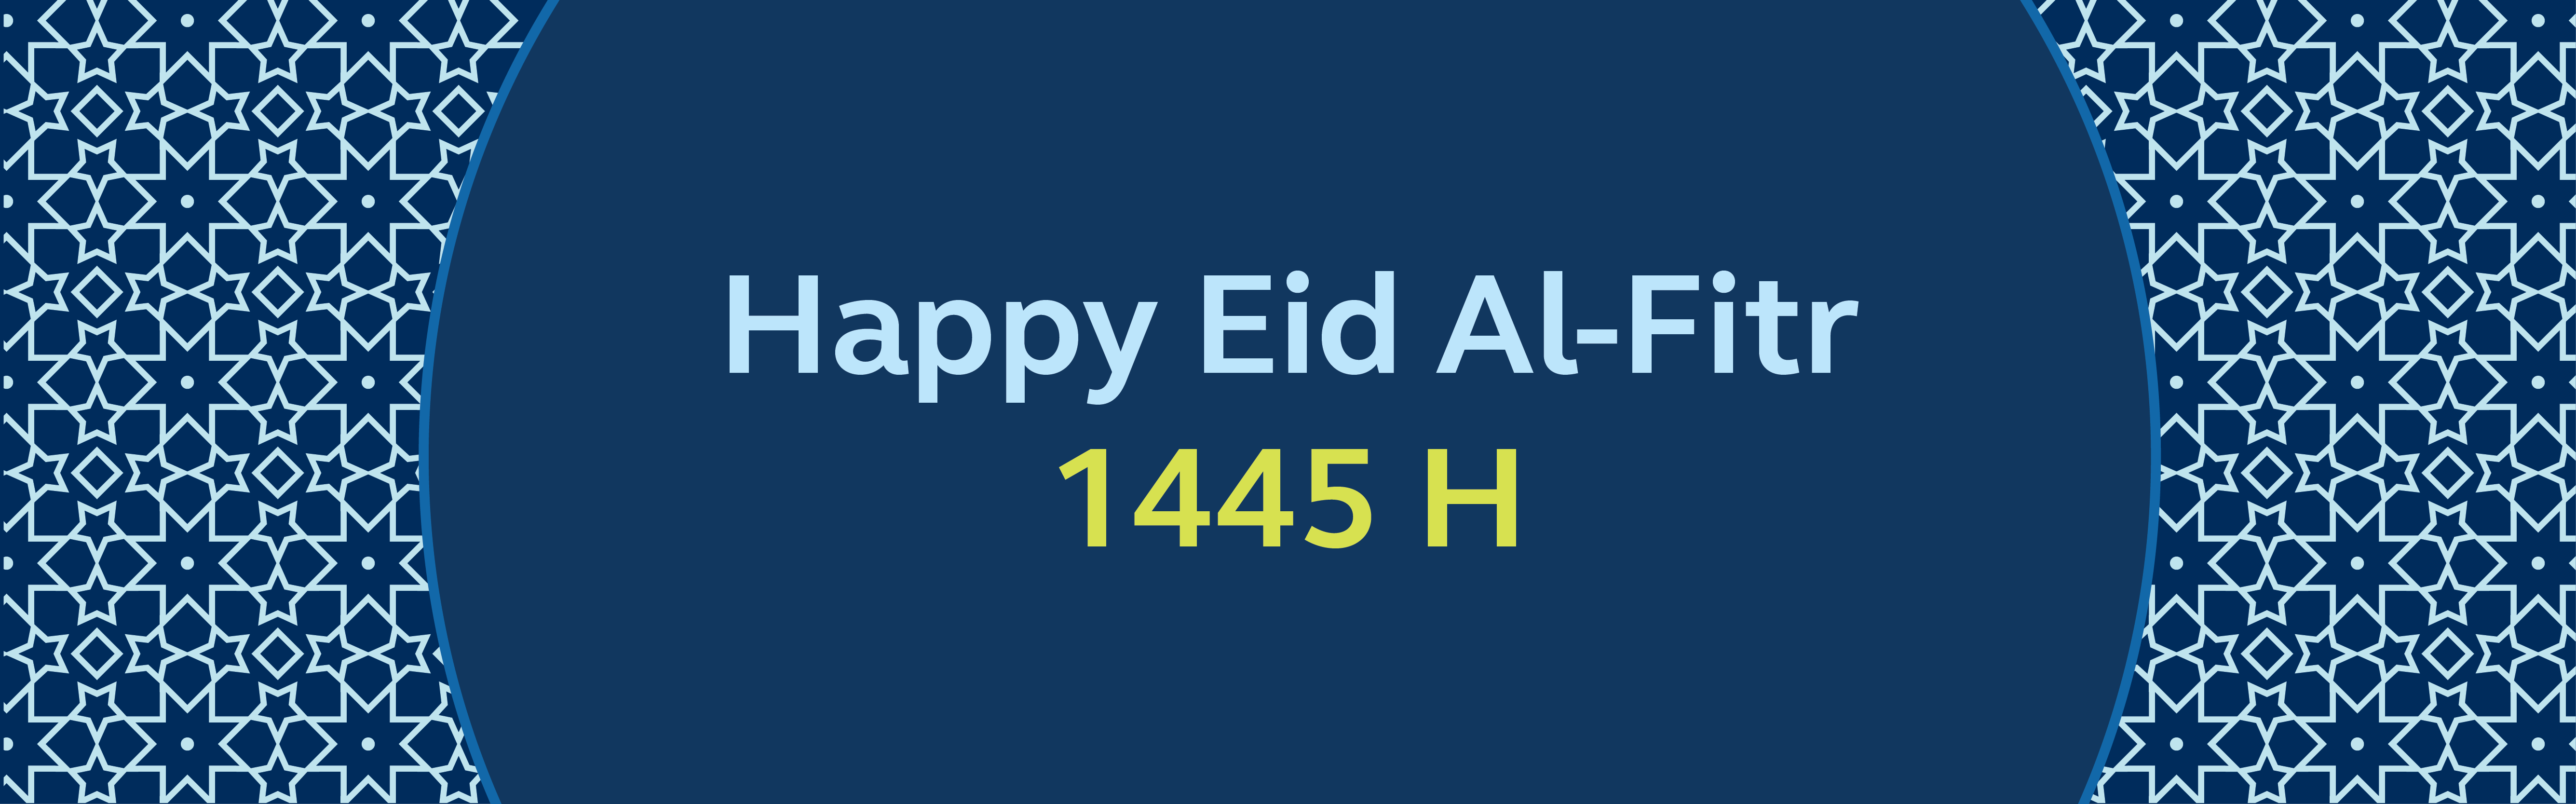 Happy Eid Al Fitr 1445 H